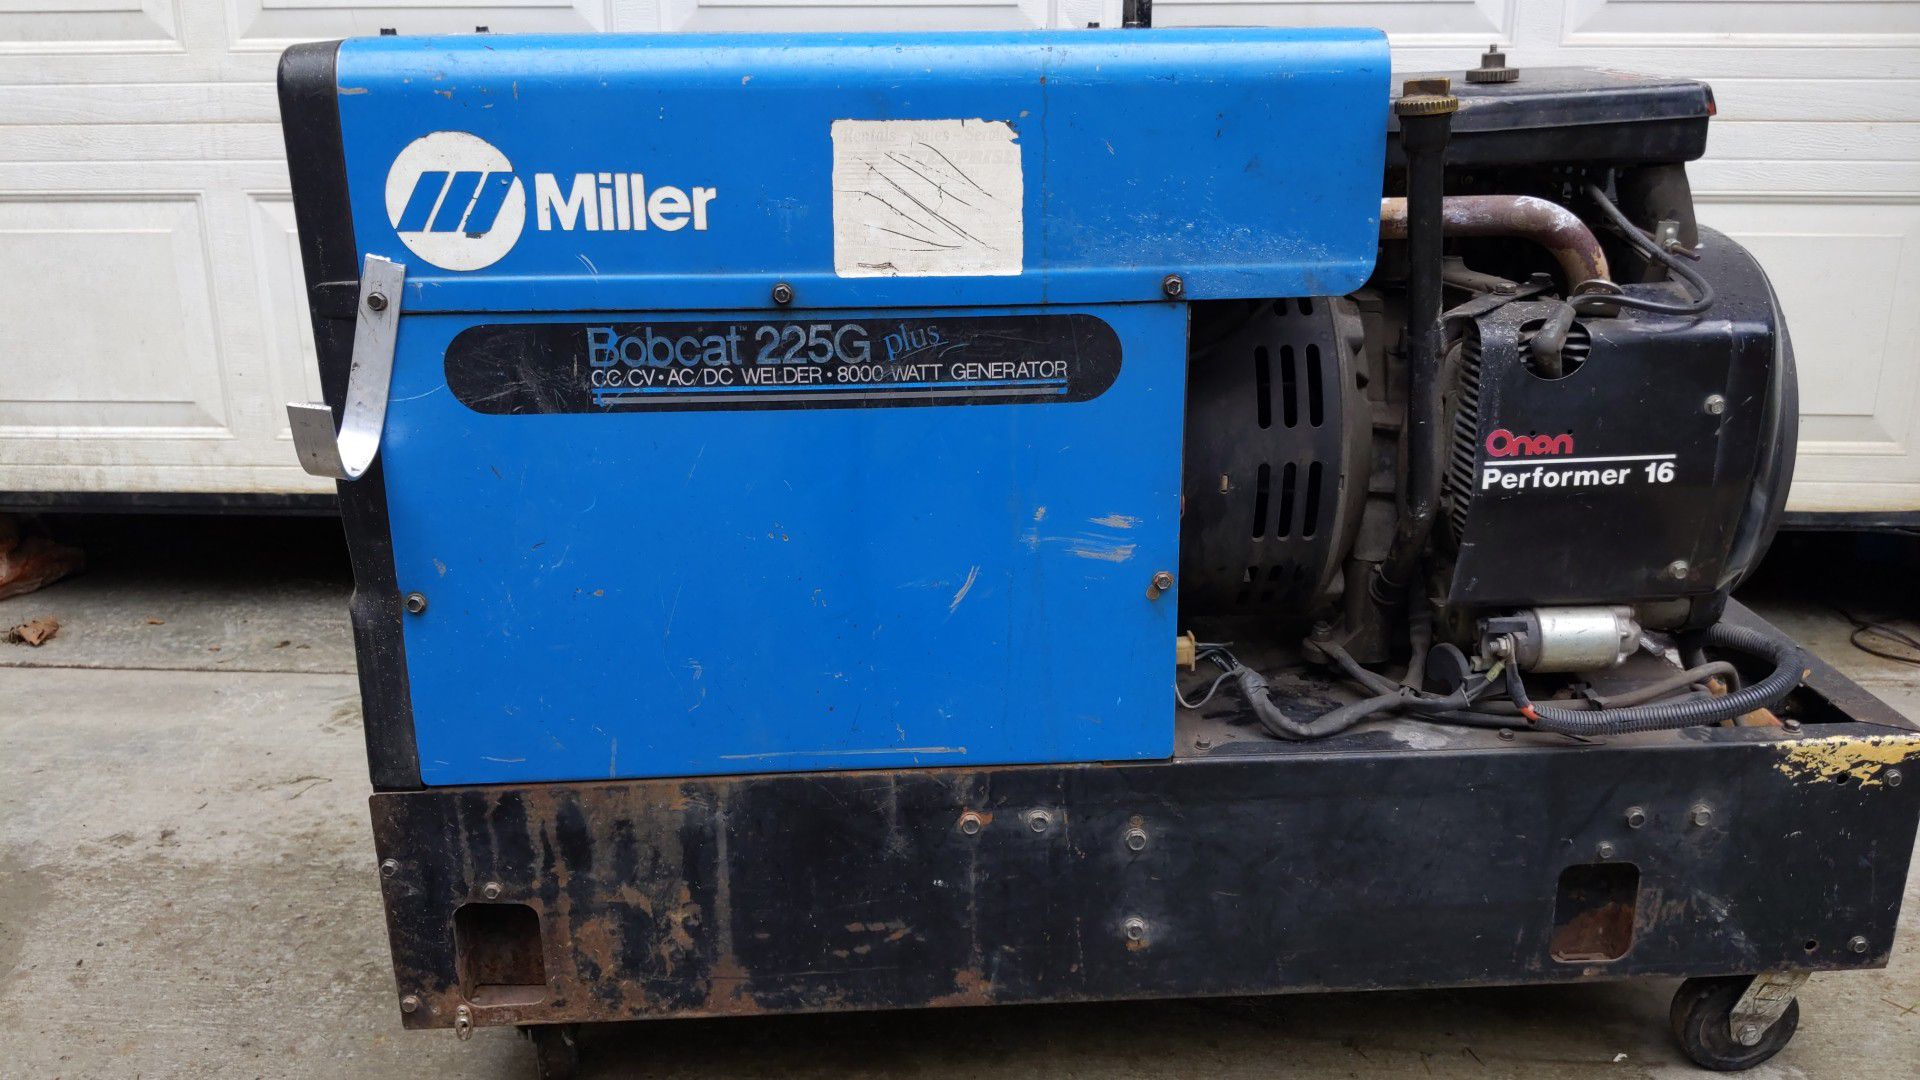 Miller Bobcat Gas Generator/Welder 225G Plus